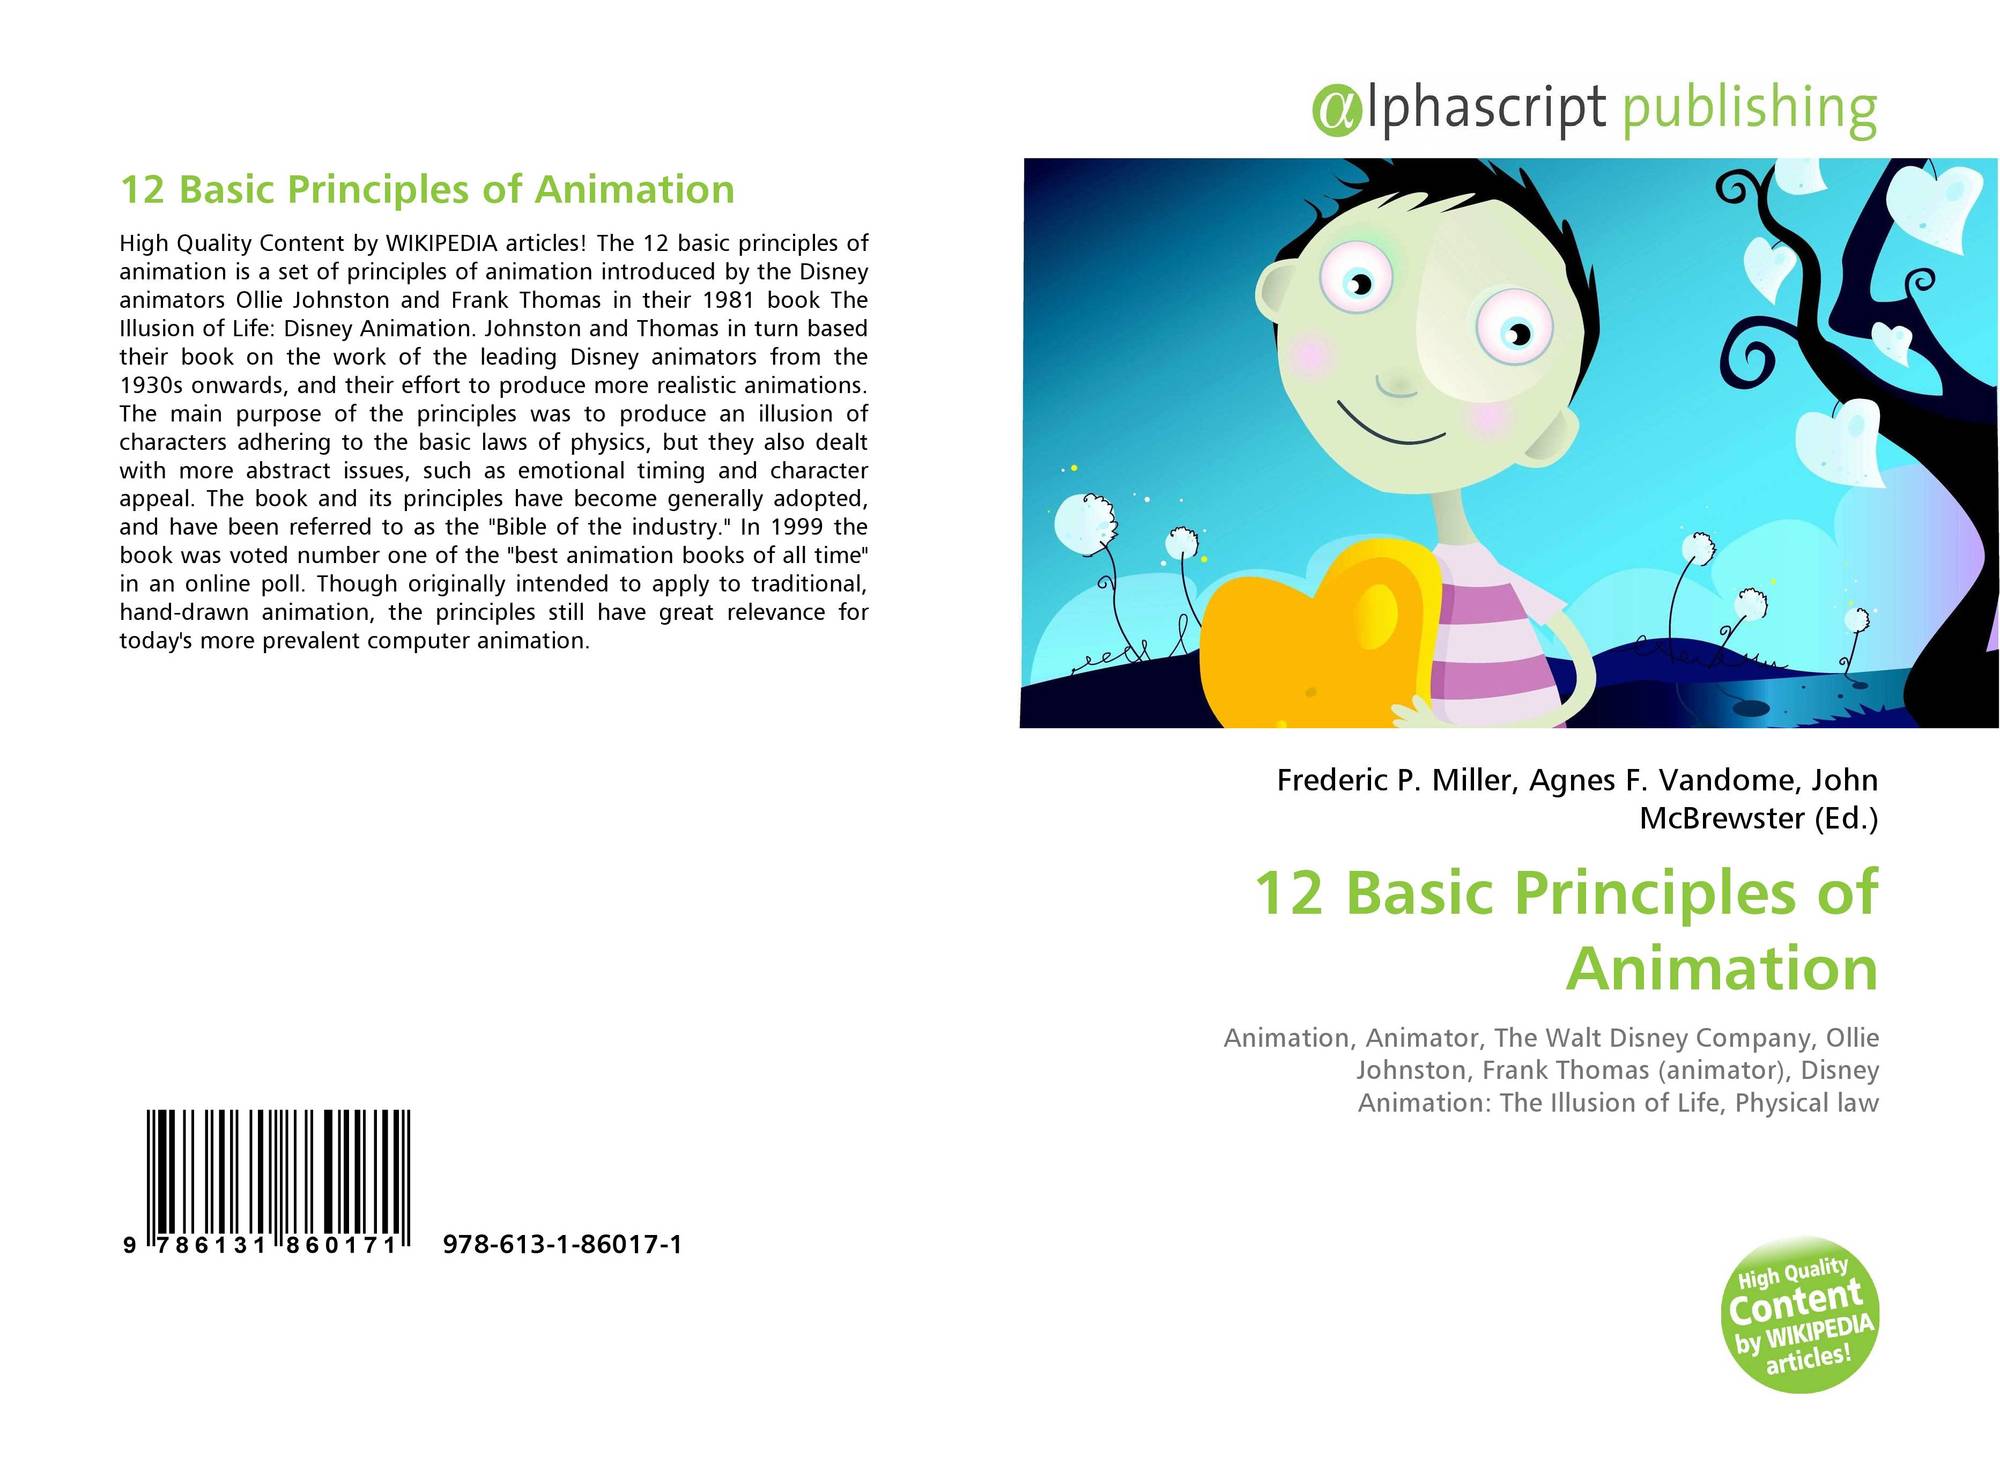 12 principles of animation pdf download